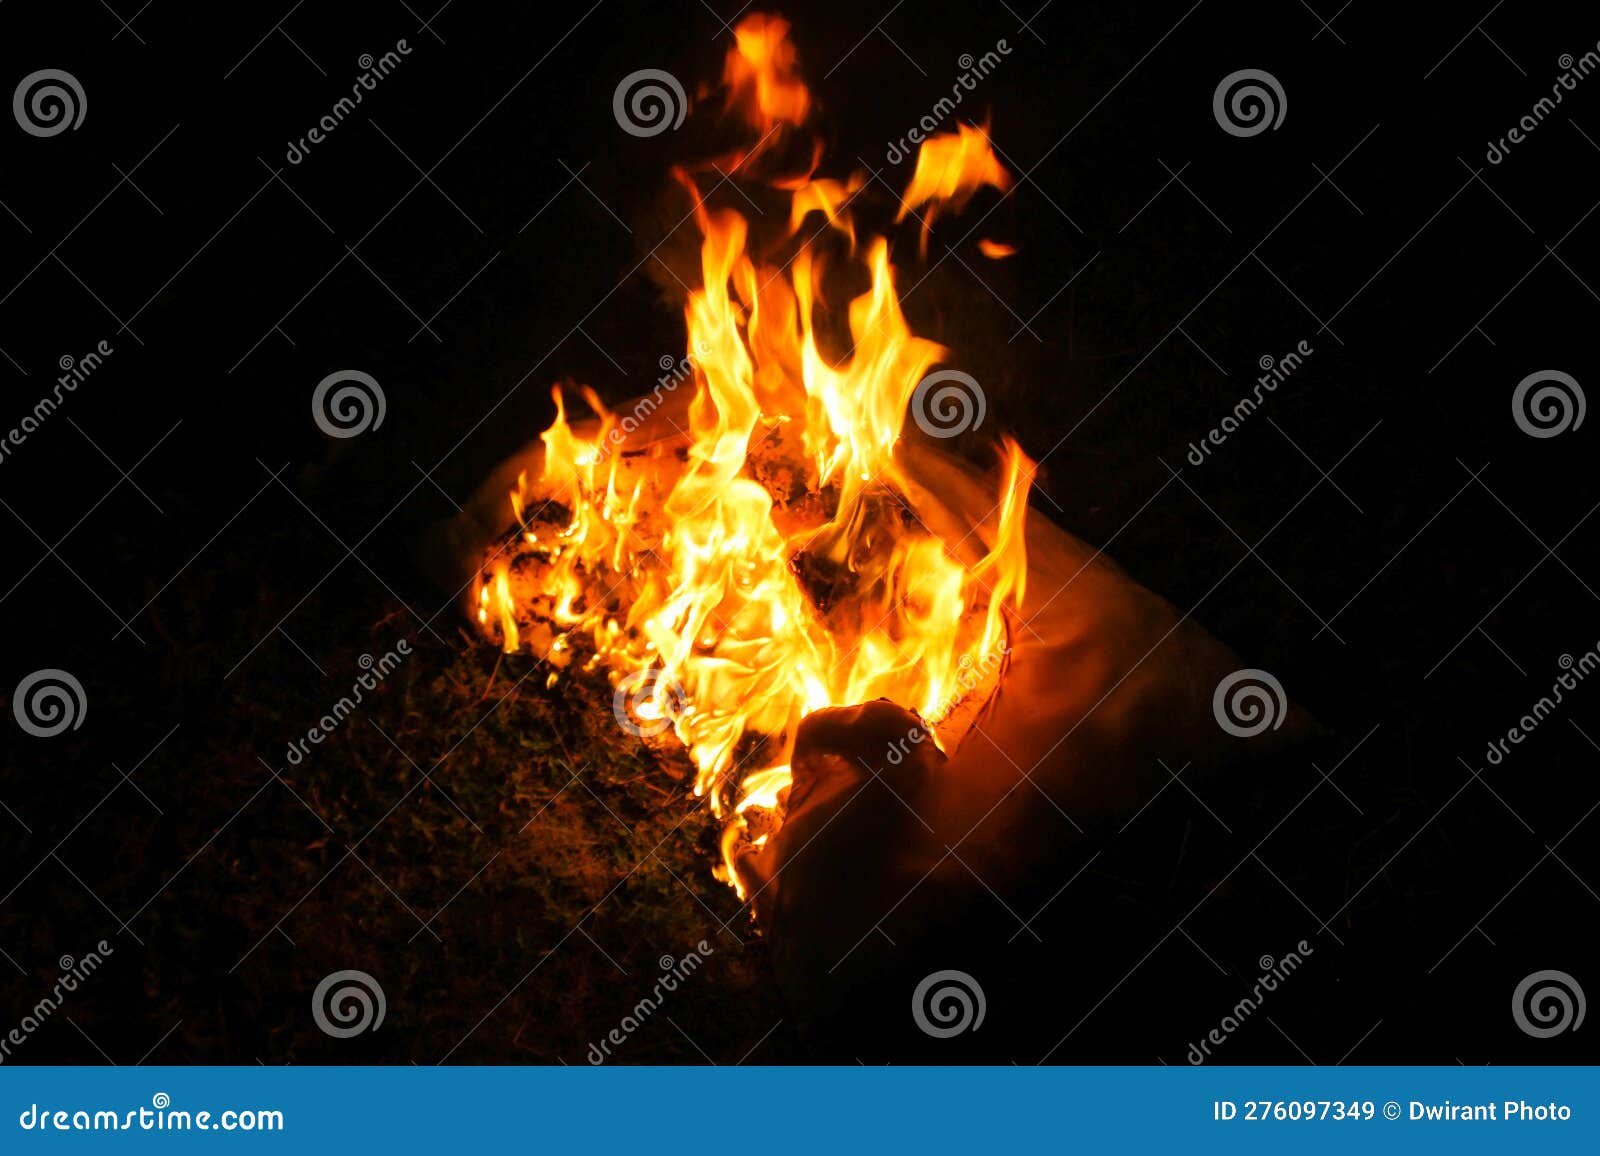 Big fire burning pillow stock image. Image of orange - 276097349